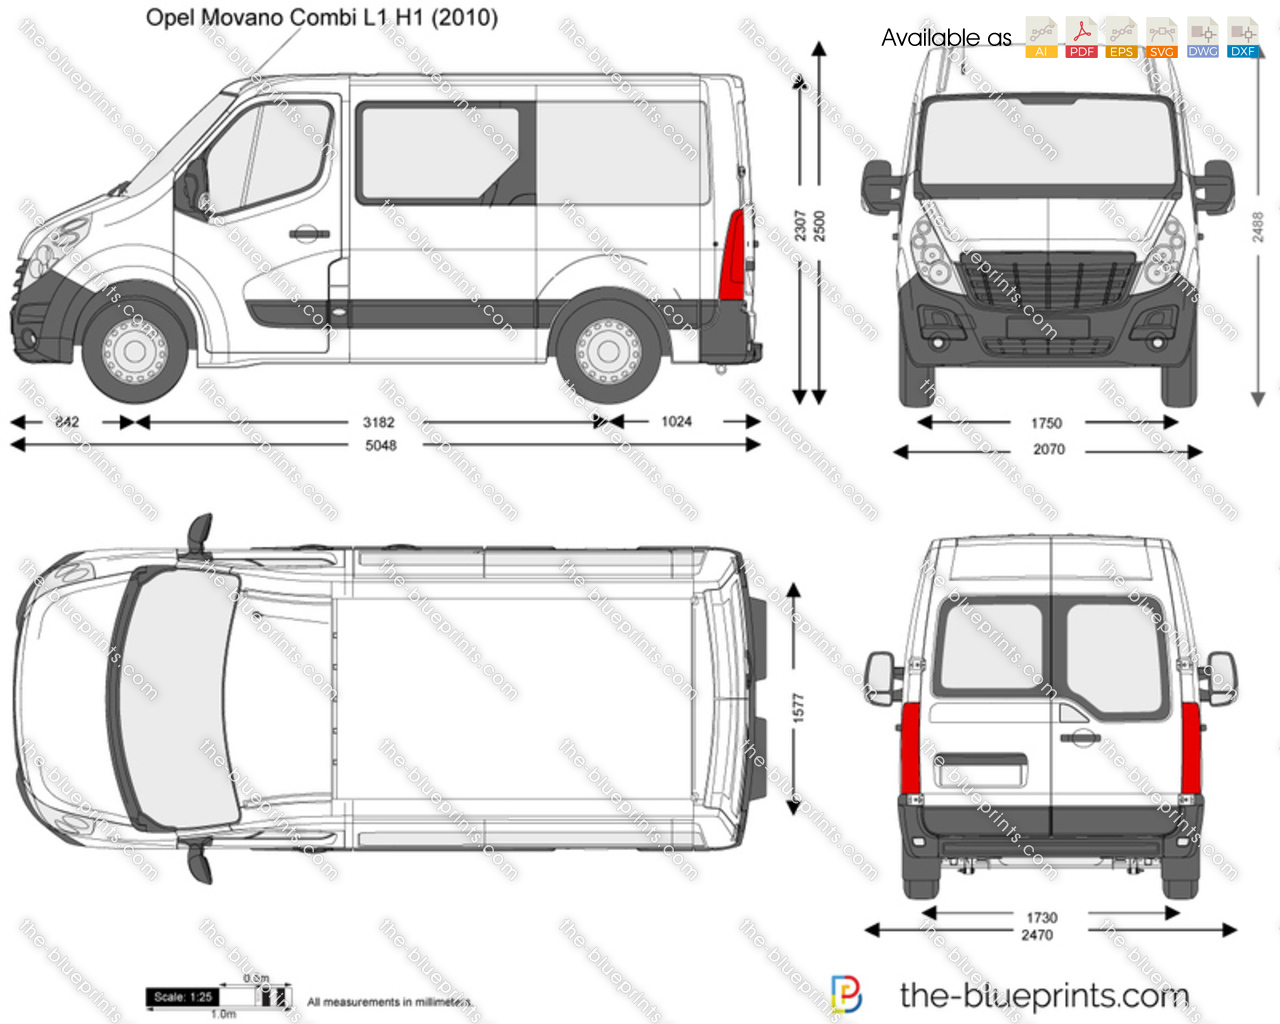 Opel Movano Combi L1 H1 vector drawing